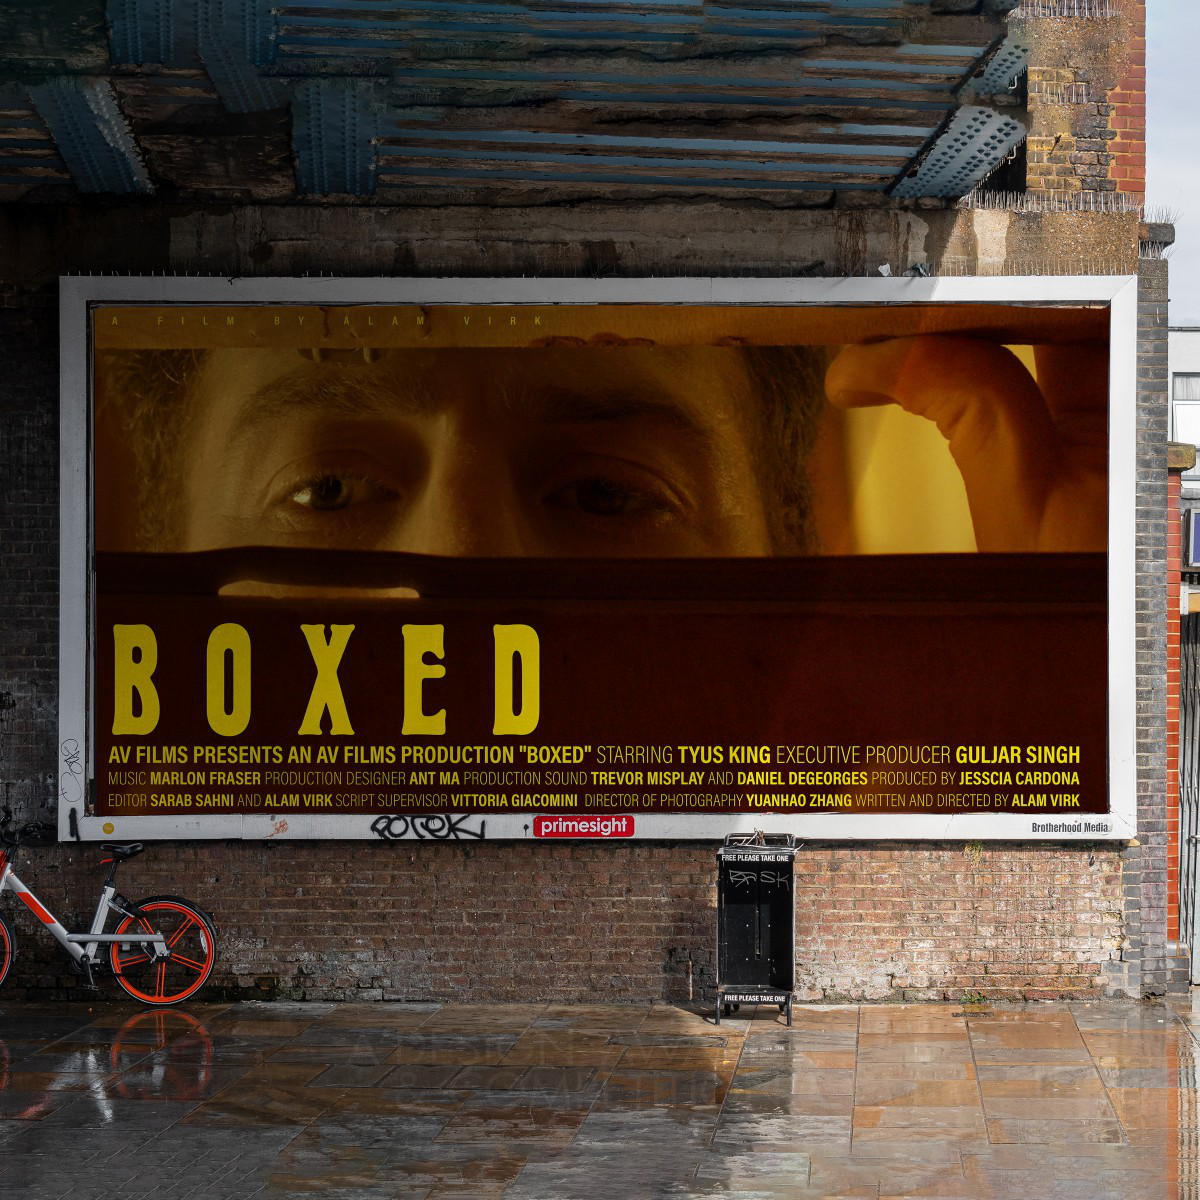 Movie Boxed: Иммерсивная кампания от Shaoyang Chen